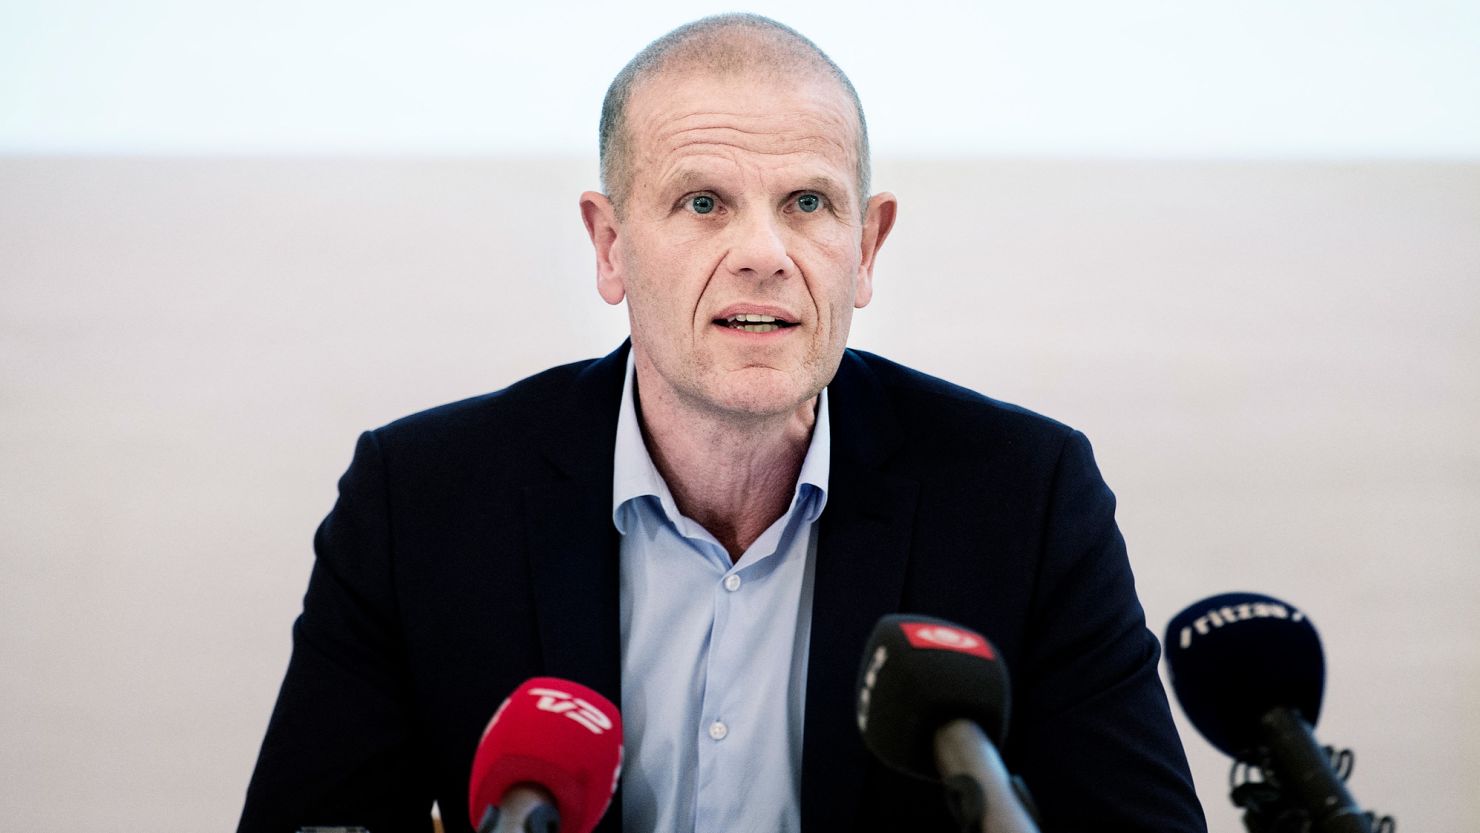 Lars Findsen speaks during a presentation of the intelligence agency's annual report at Kastellet in Copenhagen, Denmark in 2017.